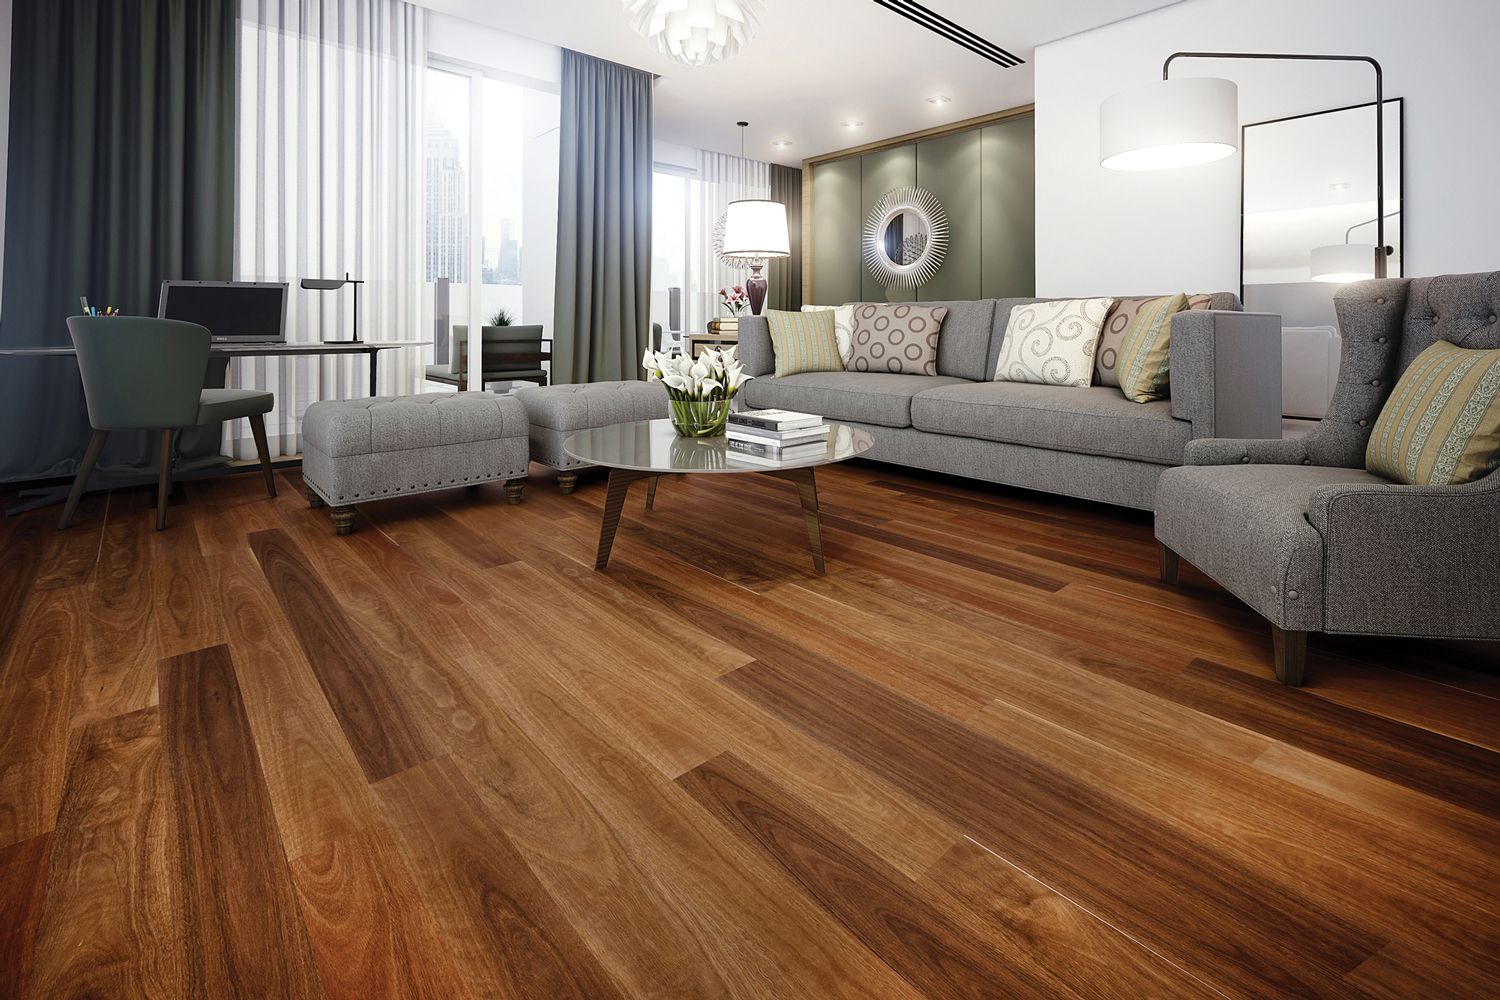 Terra Mater Hardwood Floors Engineered Timber Flooring Melbourne